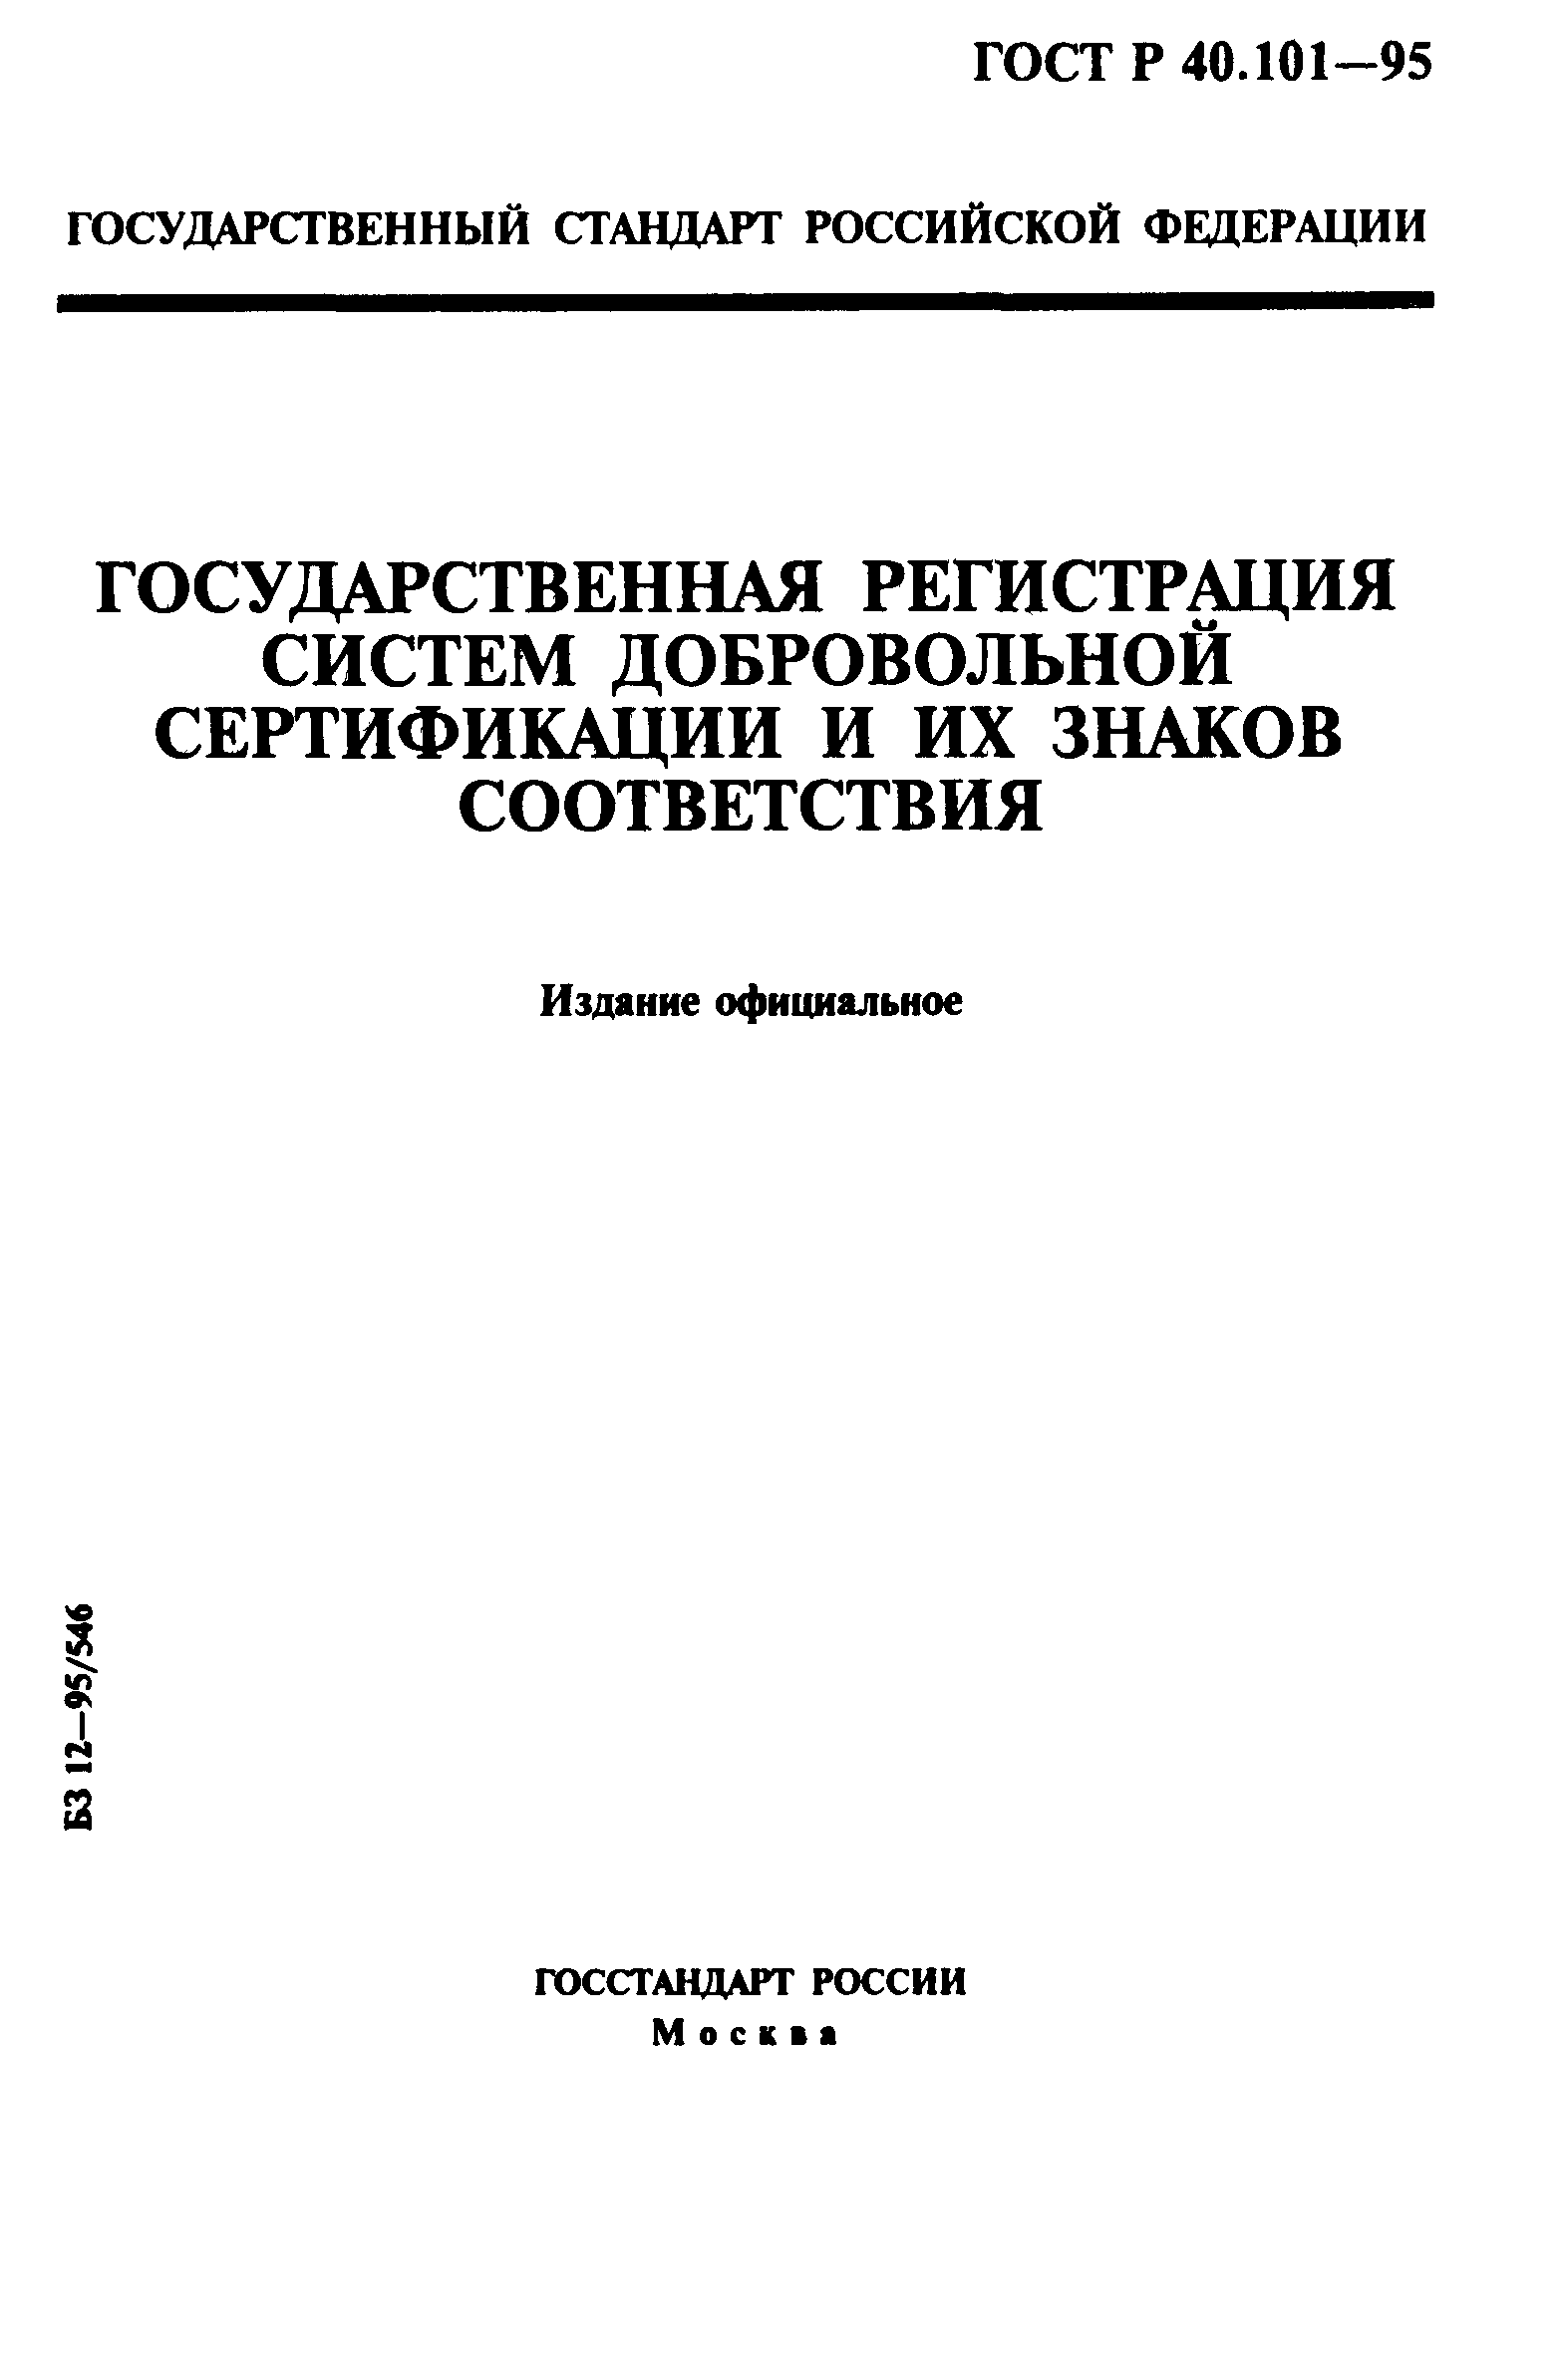 ГОСТ Р 40.101-95